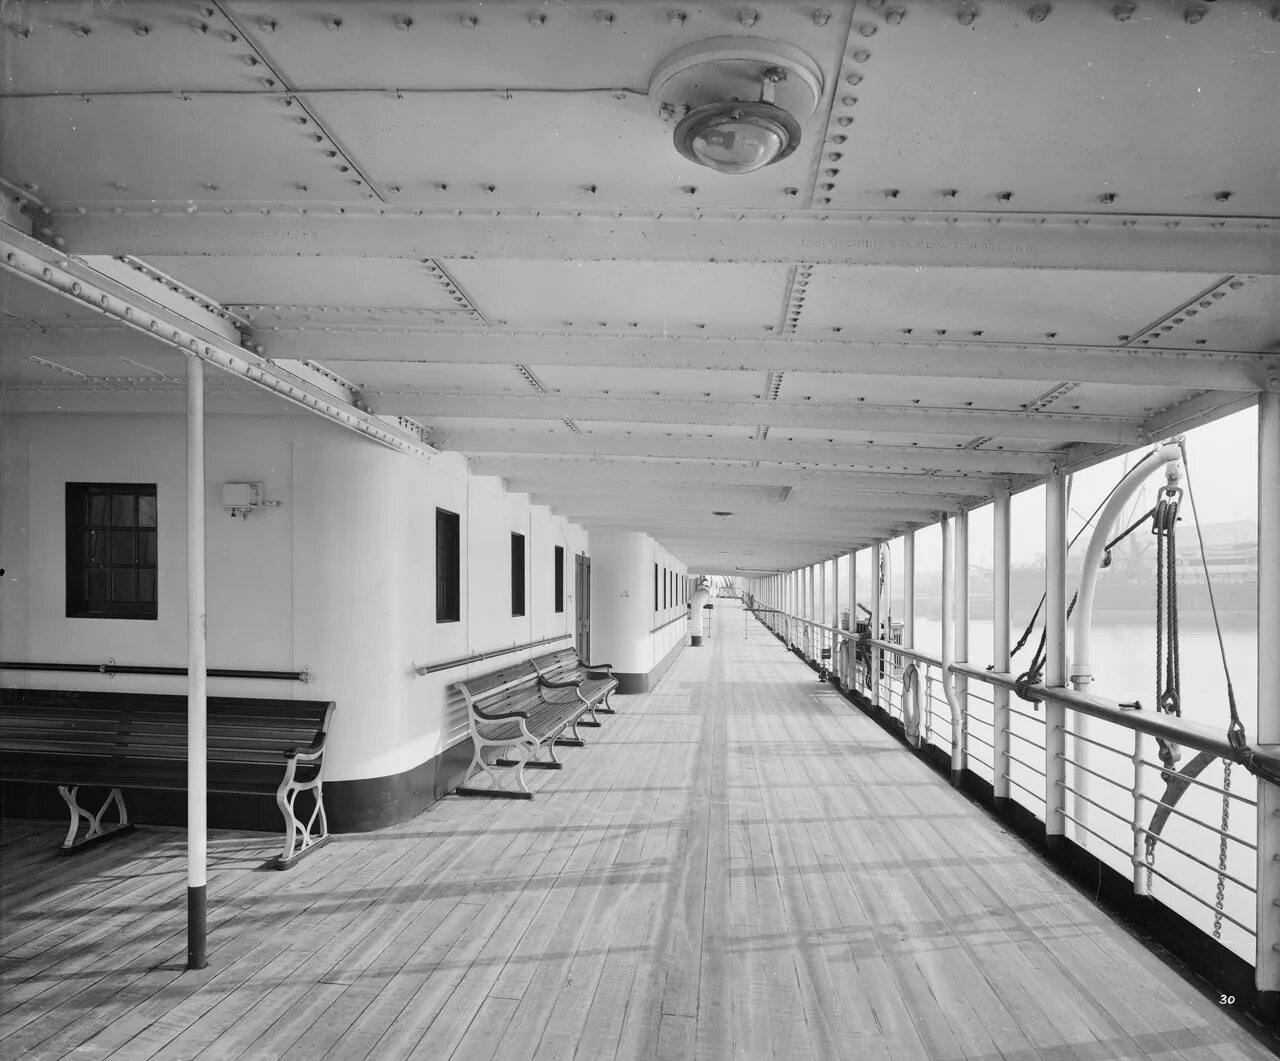 Прогулочная палуба. Прогулочная палуба Титаника. Титаник палуба променад. RMS Titanic Promenade. Шлюпочная палуба Титаника.